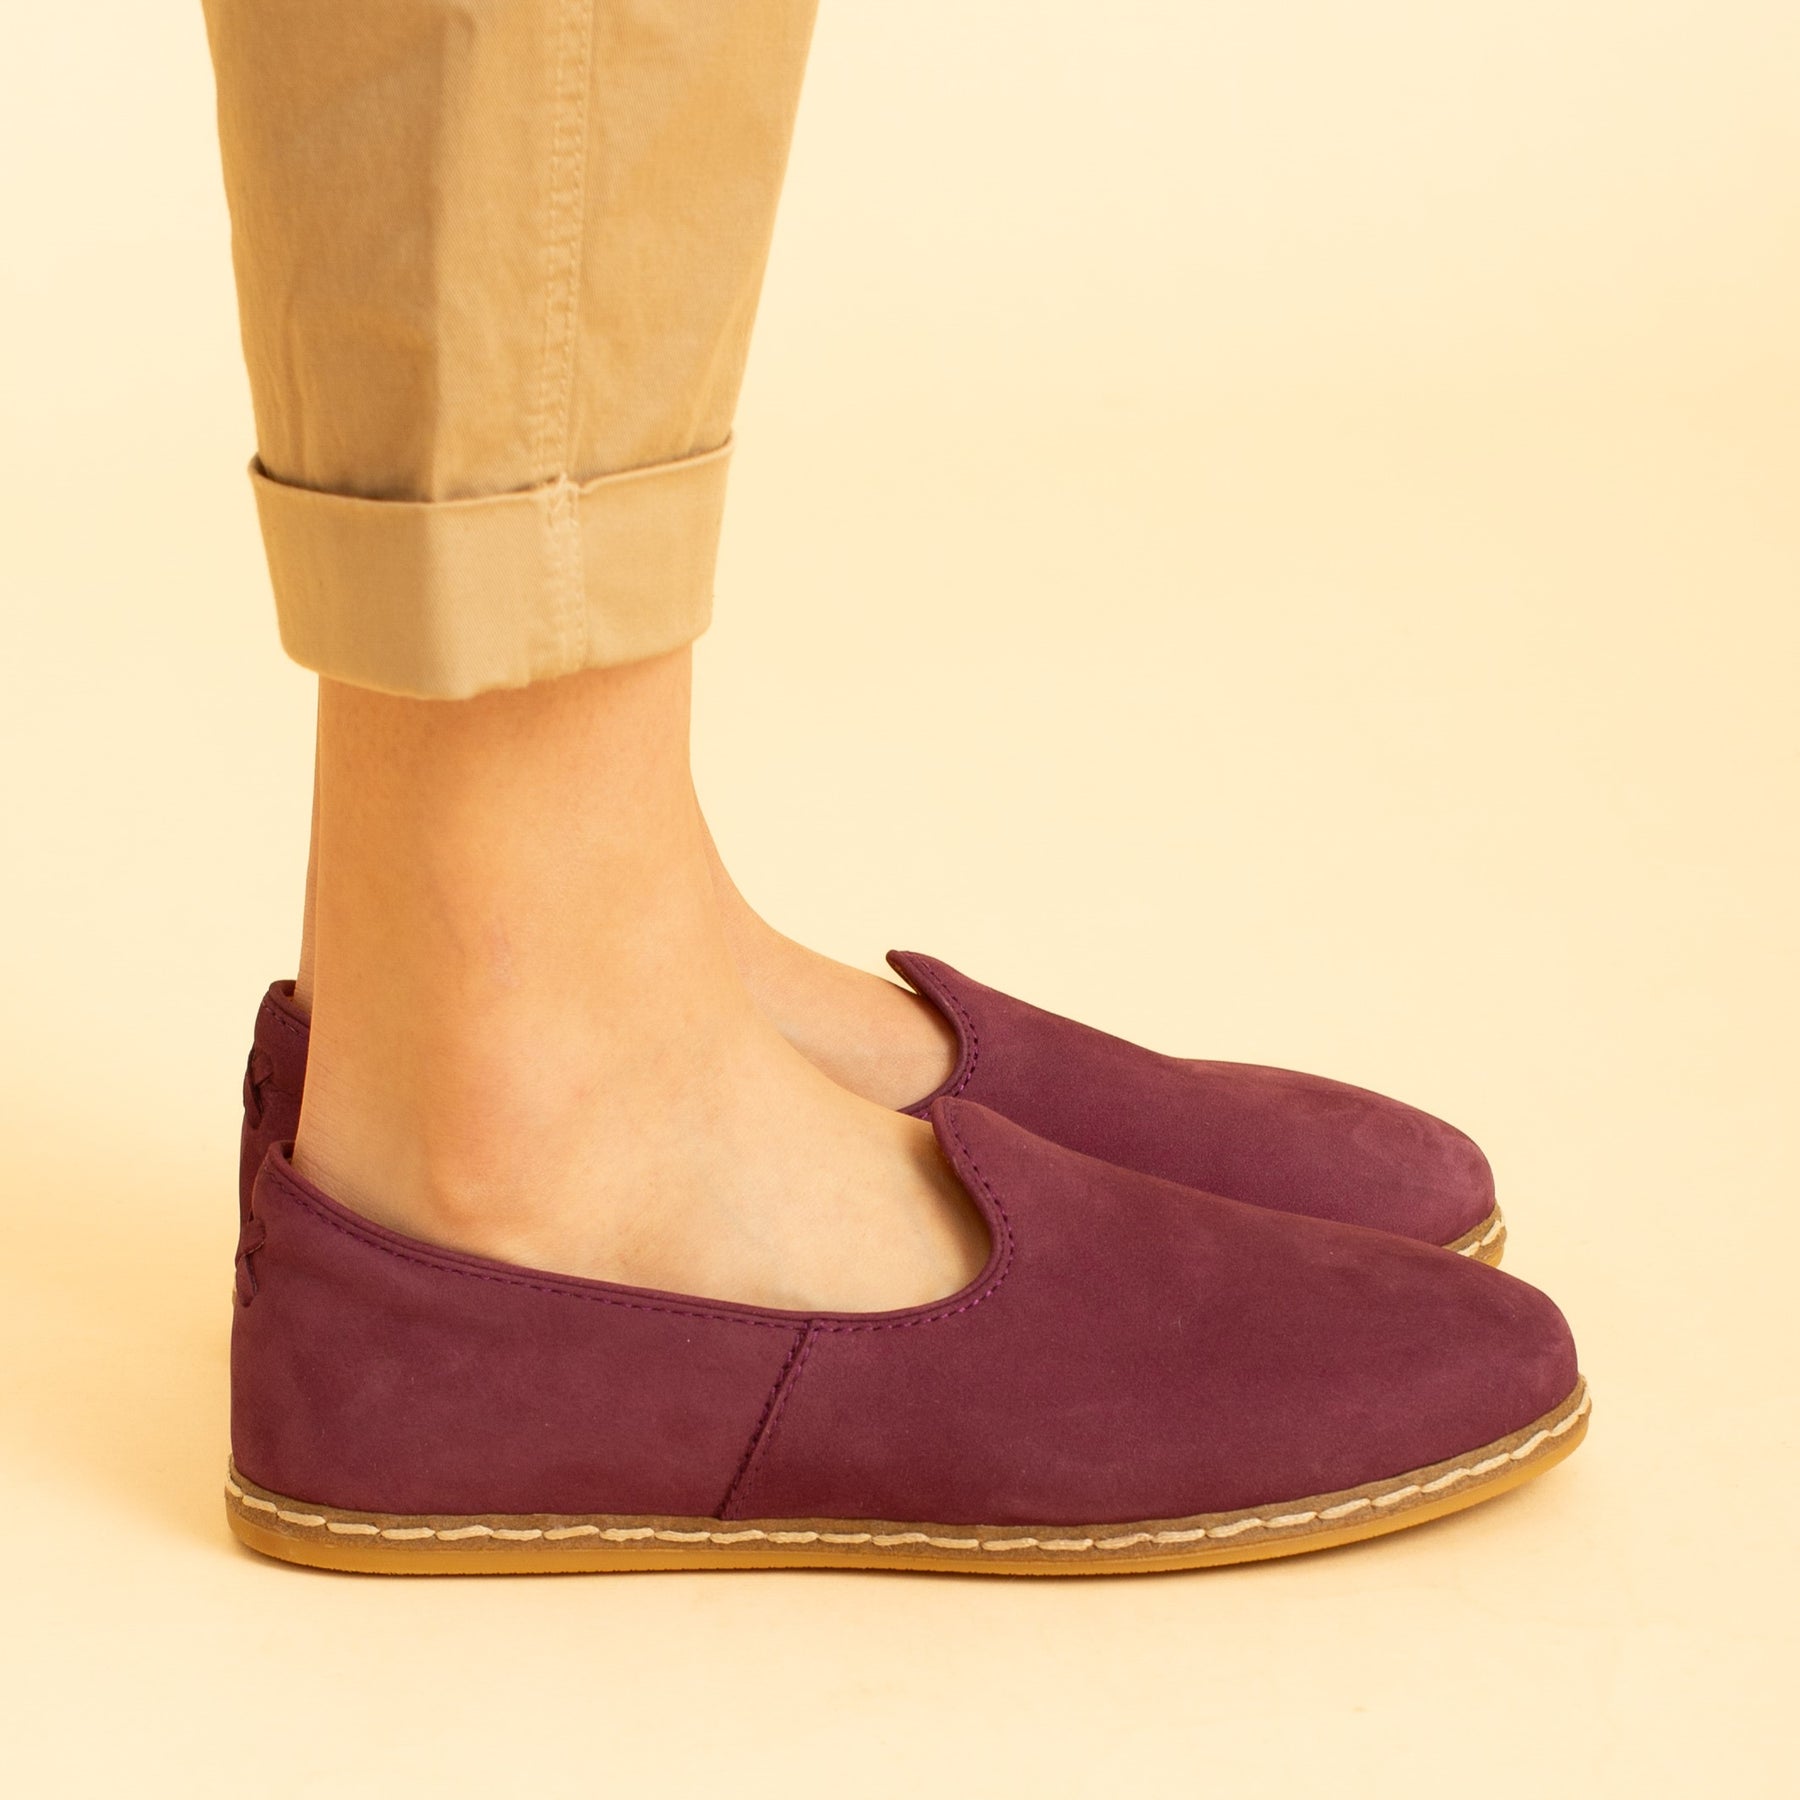 Purple Suede Slip On Shoes - Charix Shoes